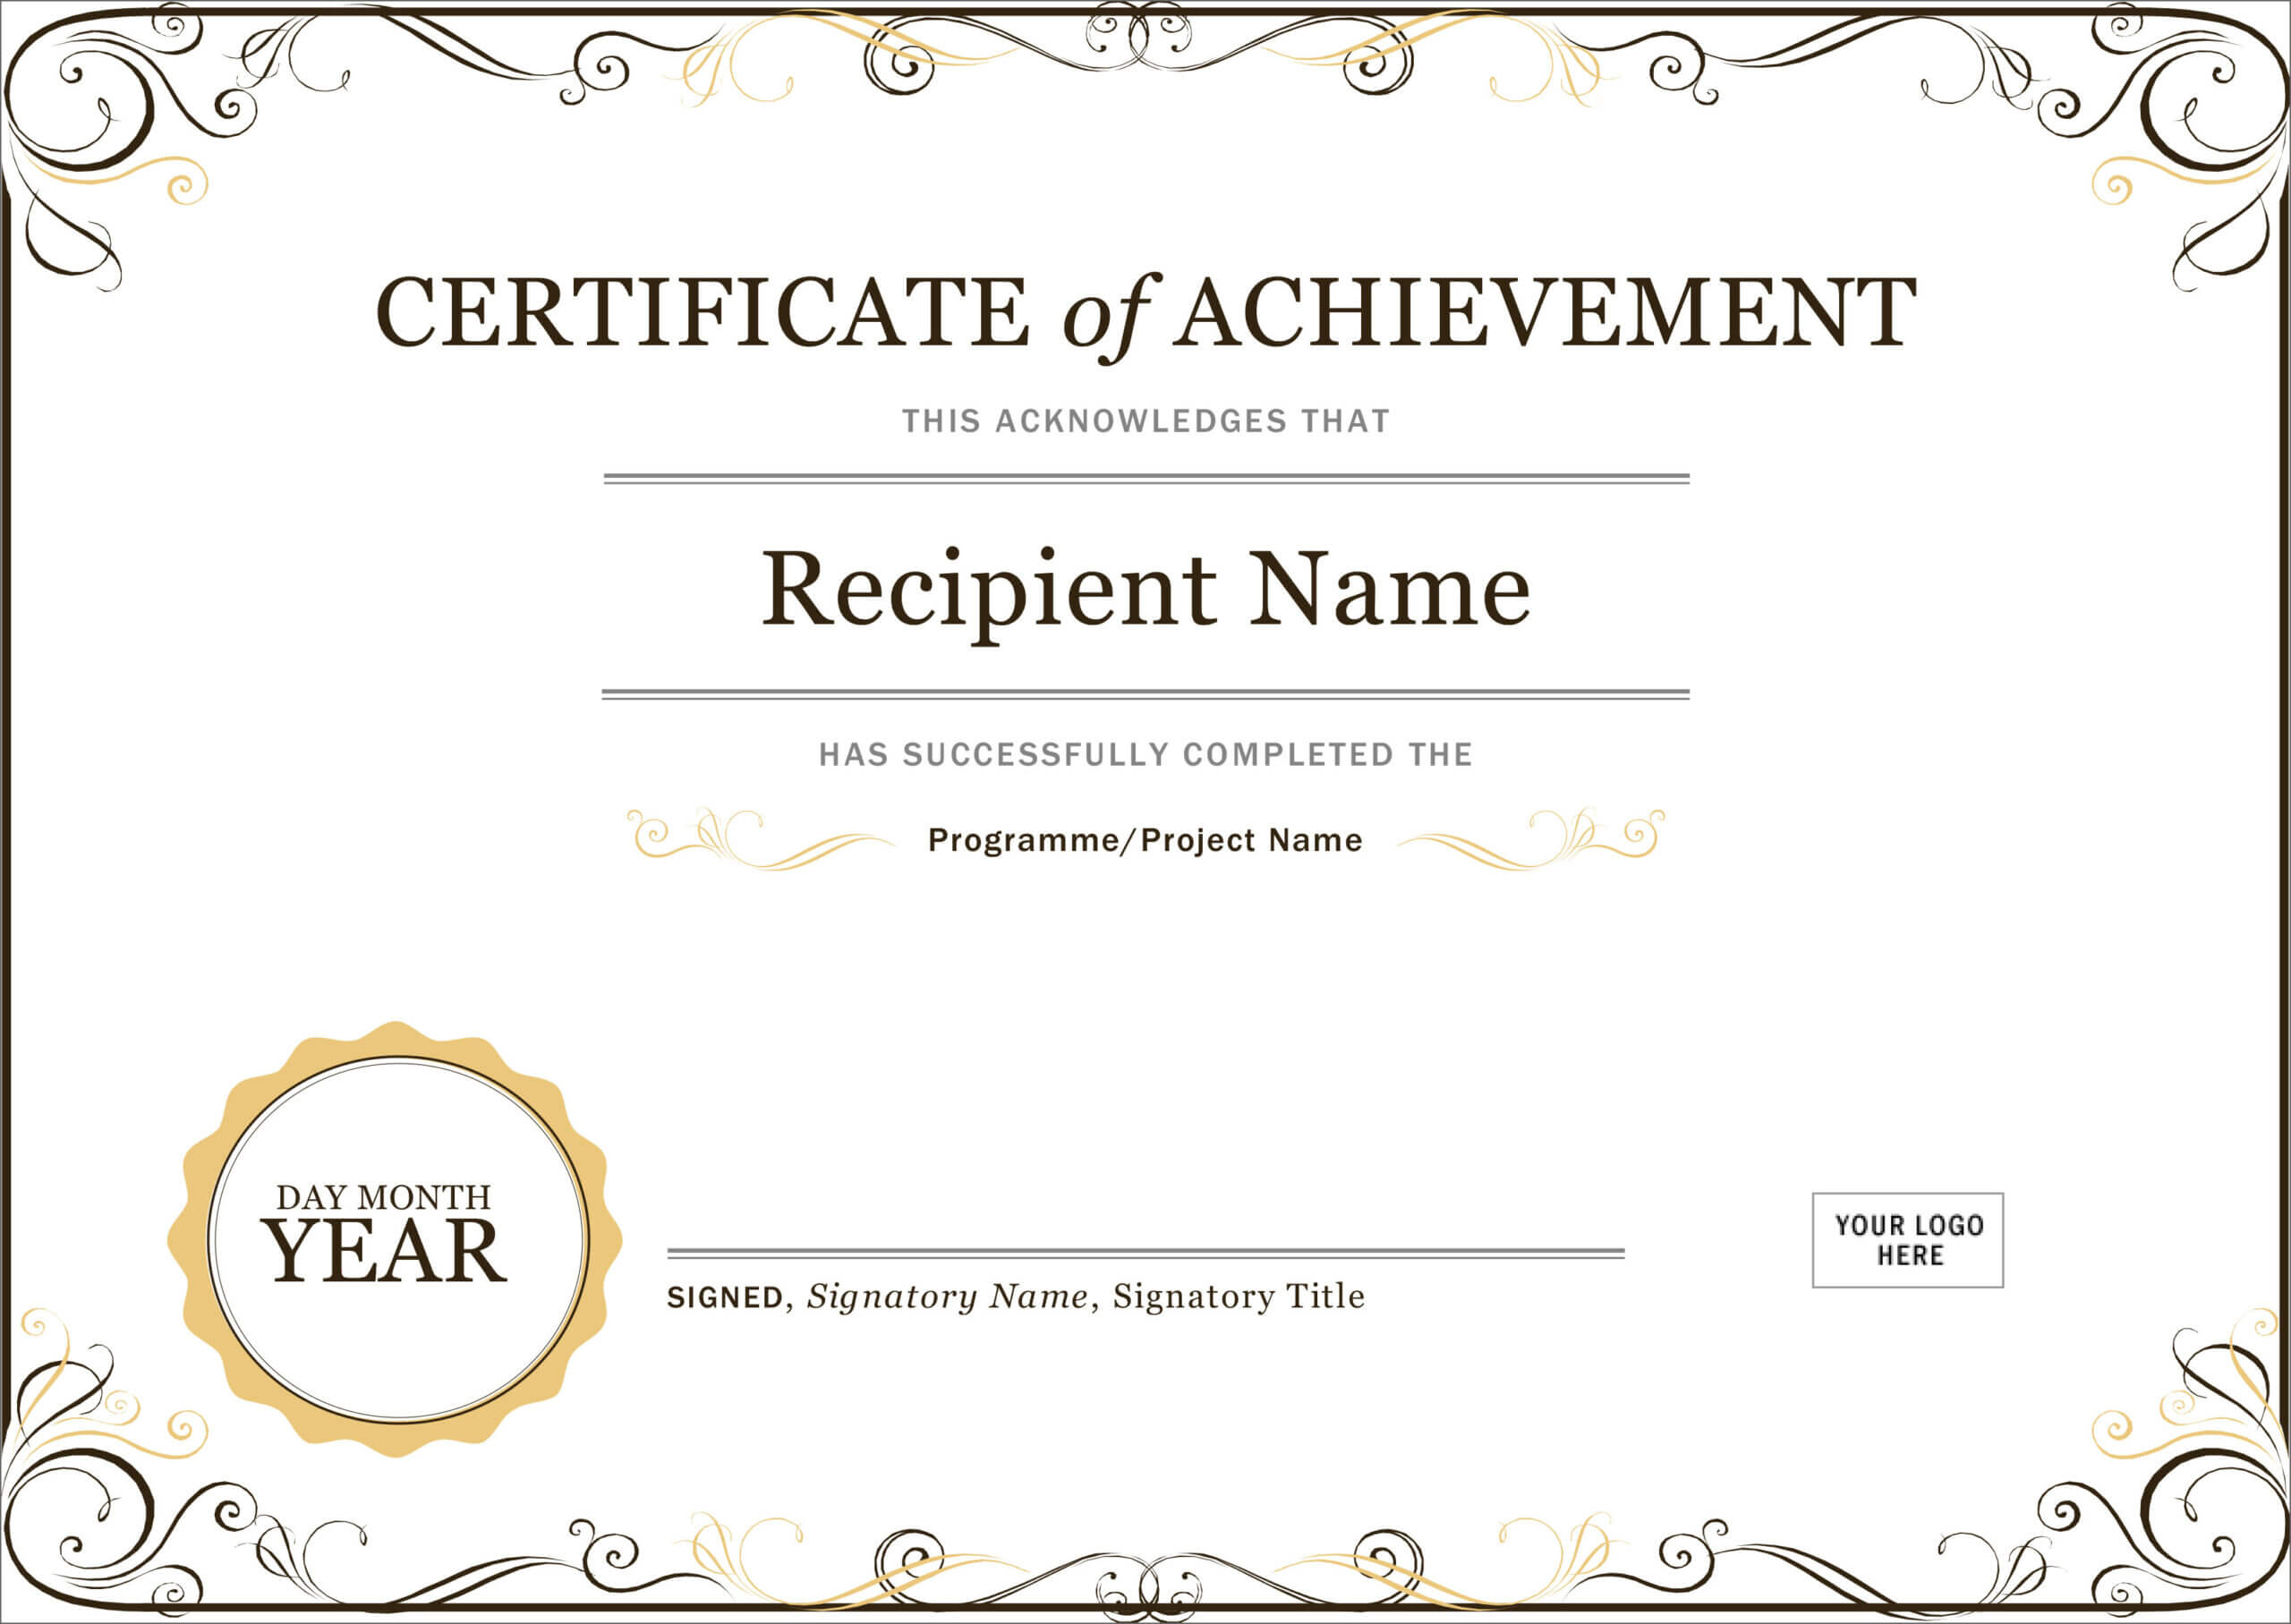 50 Free Creative Blank Certificate Templates In Psd Regarding Certificate Of Achievement Template Word